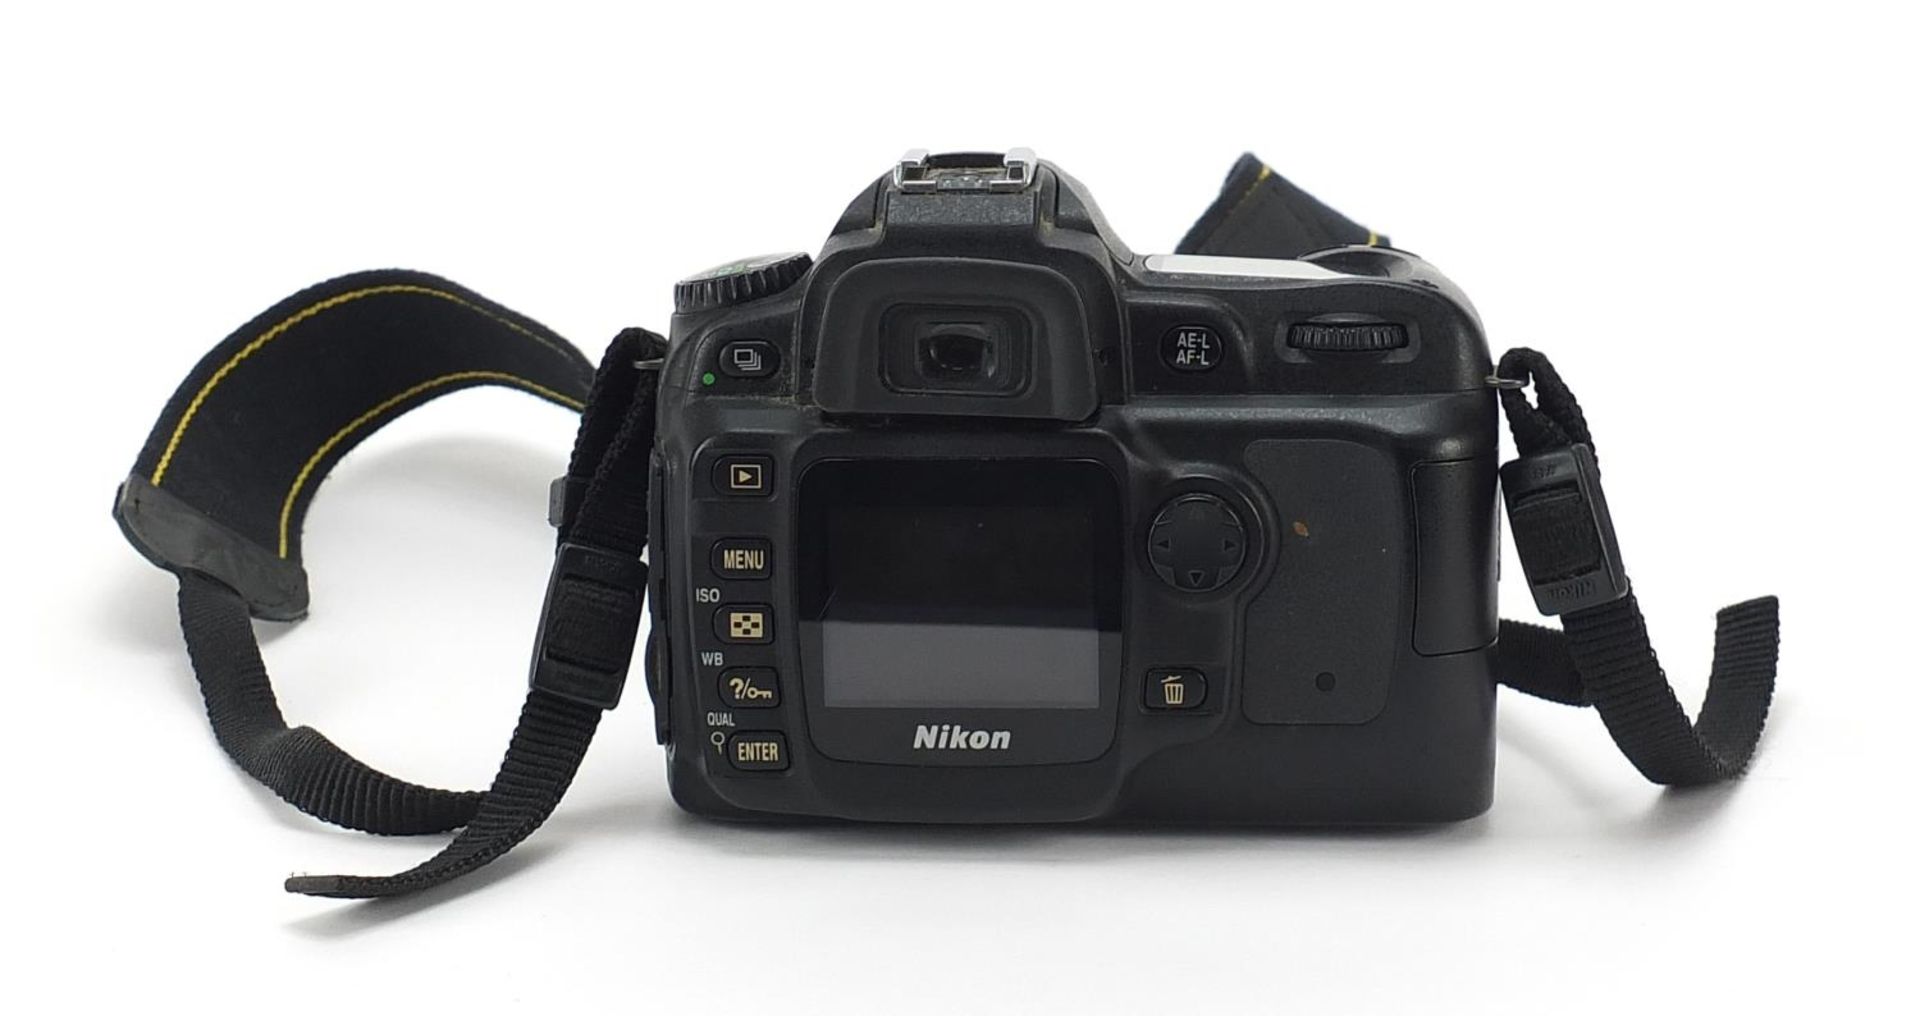 Nikon D50 DSL camera - Image 4 of 6